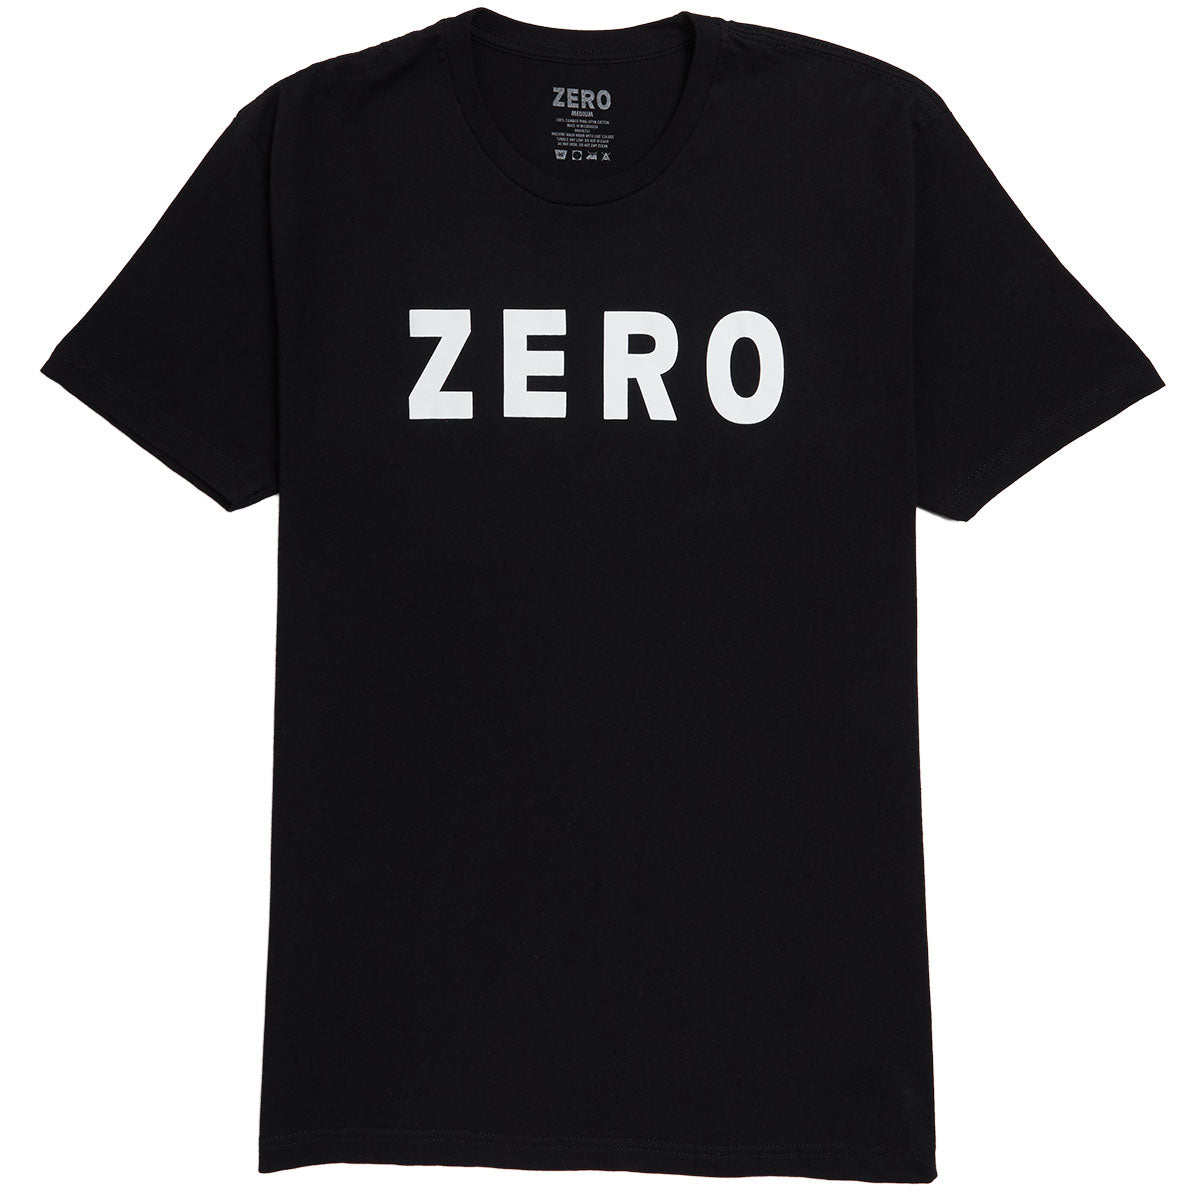 Zero Army T-Shirt - Black image 1